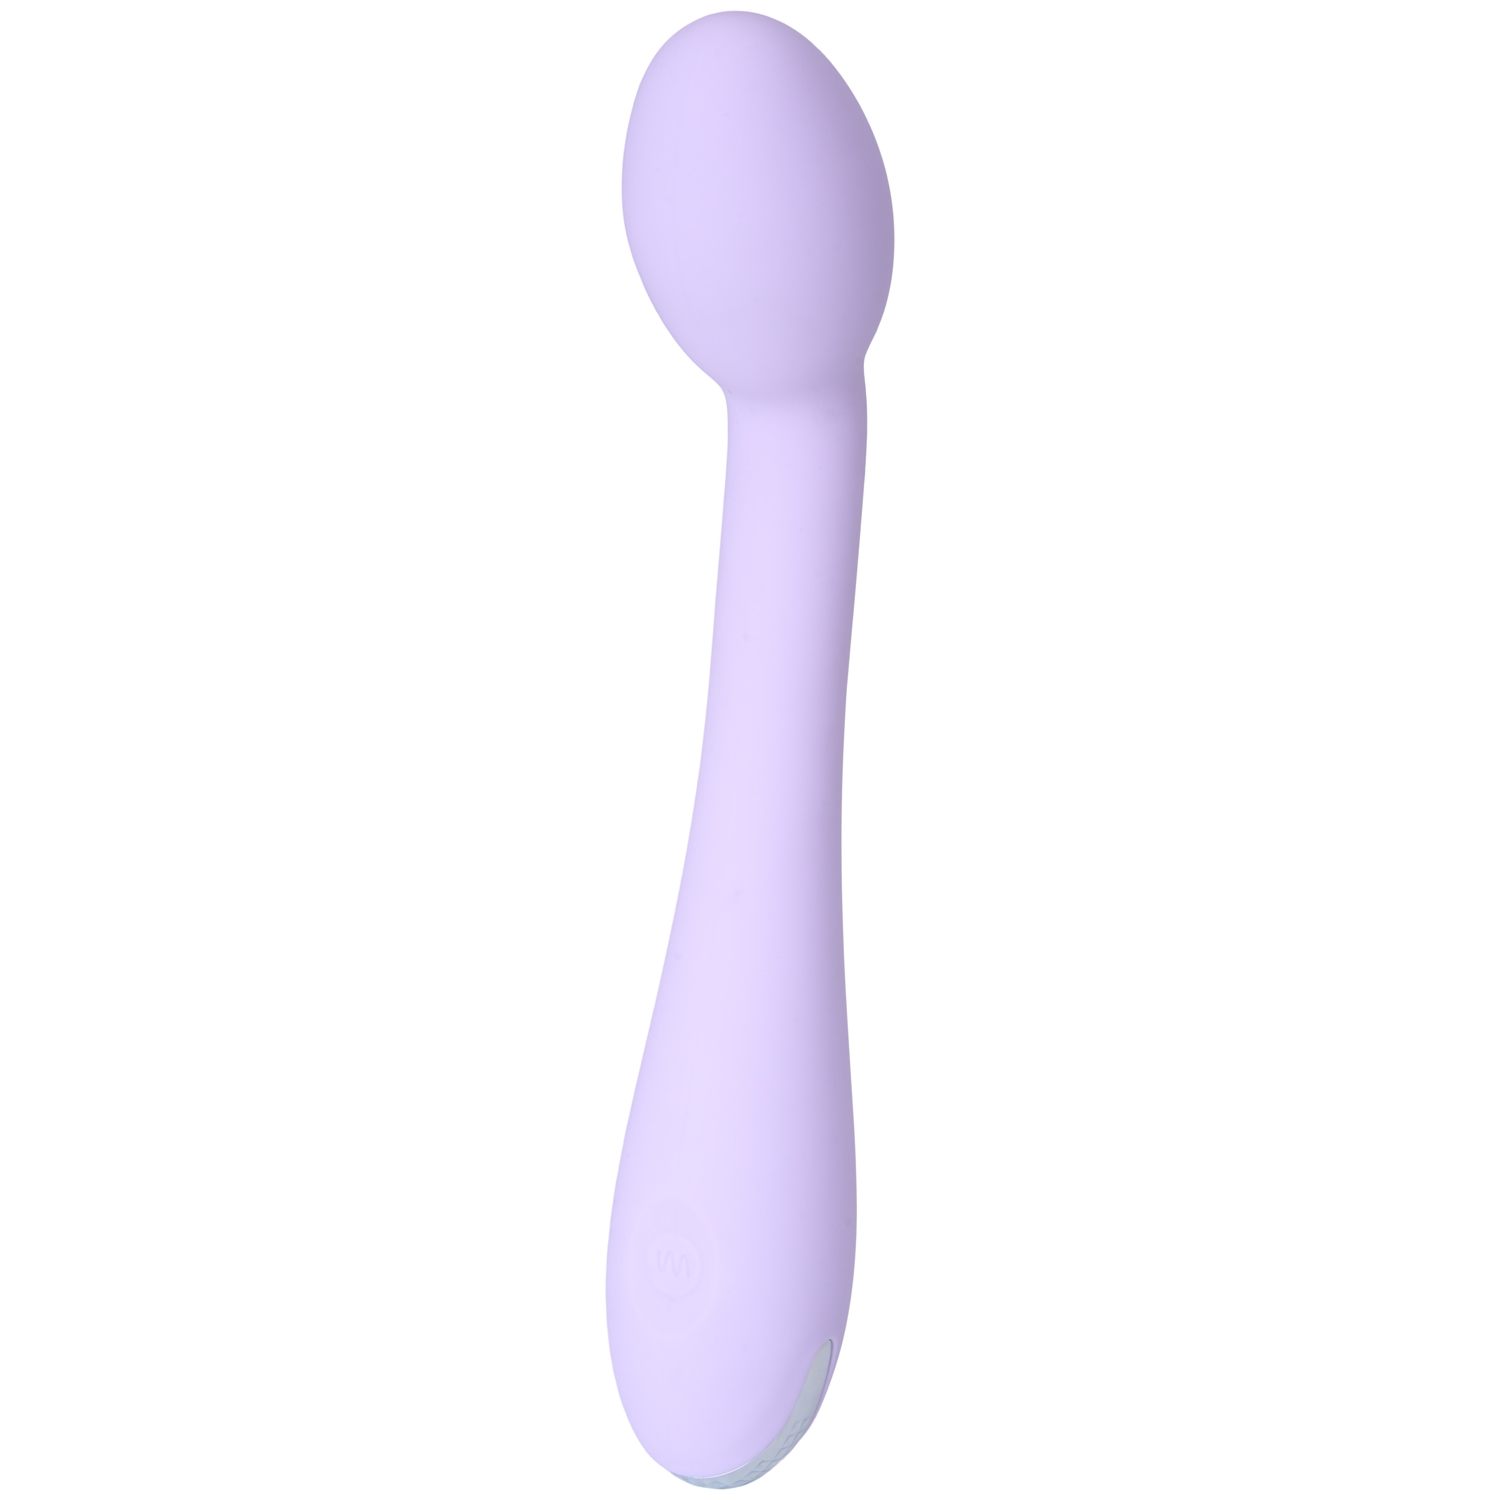 Sinful Slim Lavendel G-punkts Vibrator med 12 Hastigheder - Purple thumbnail